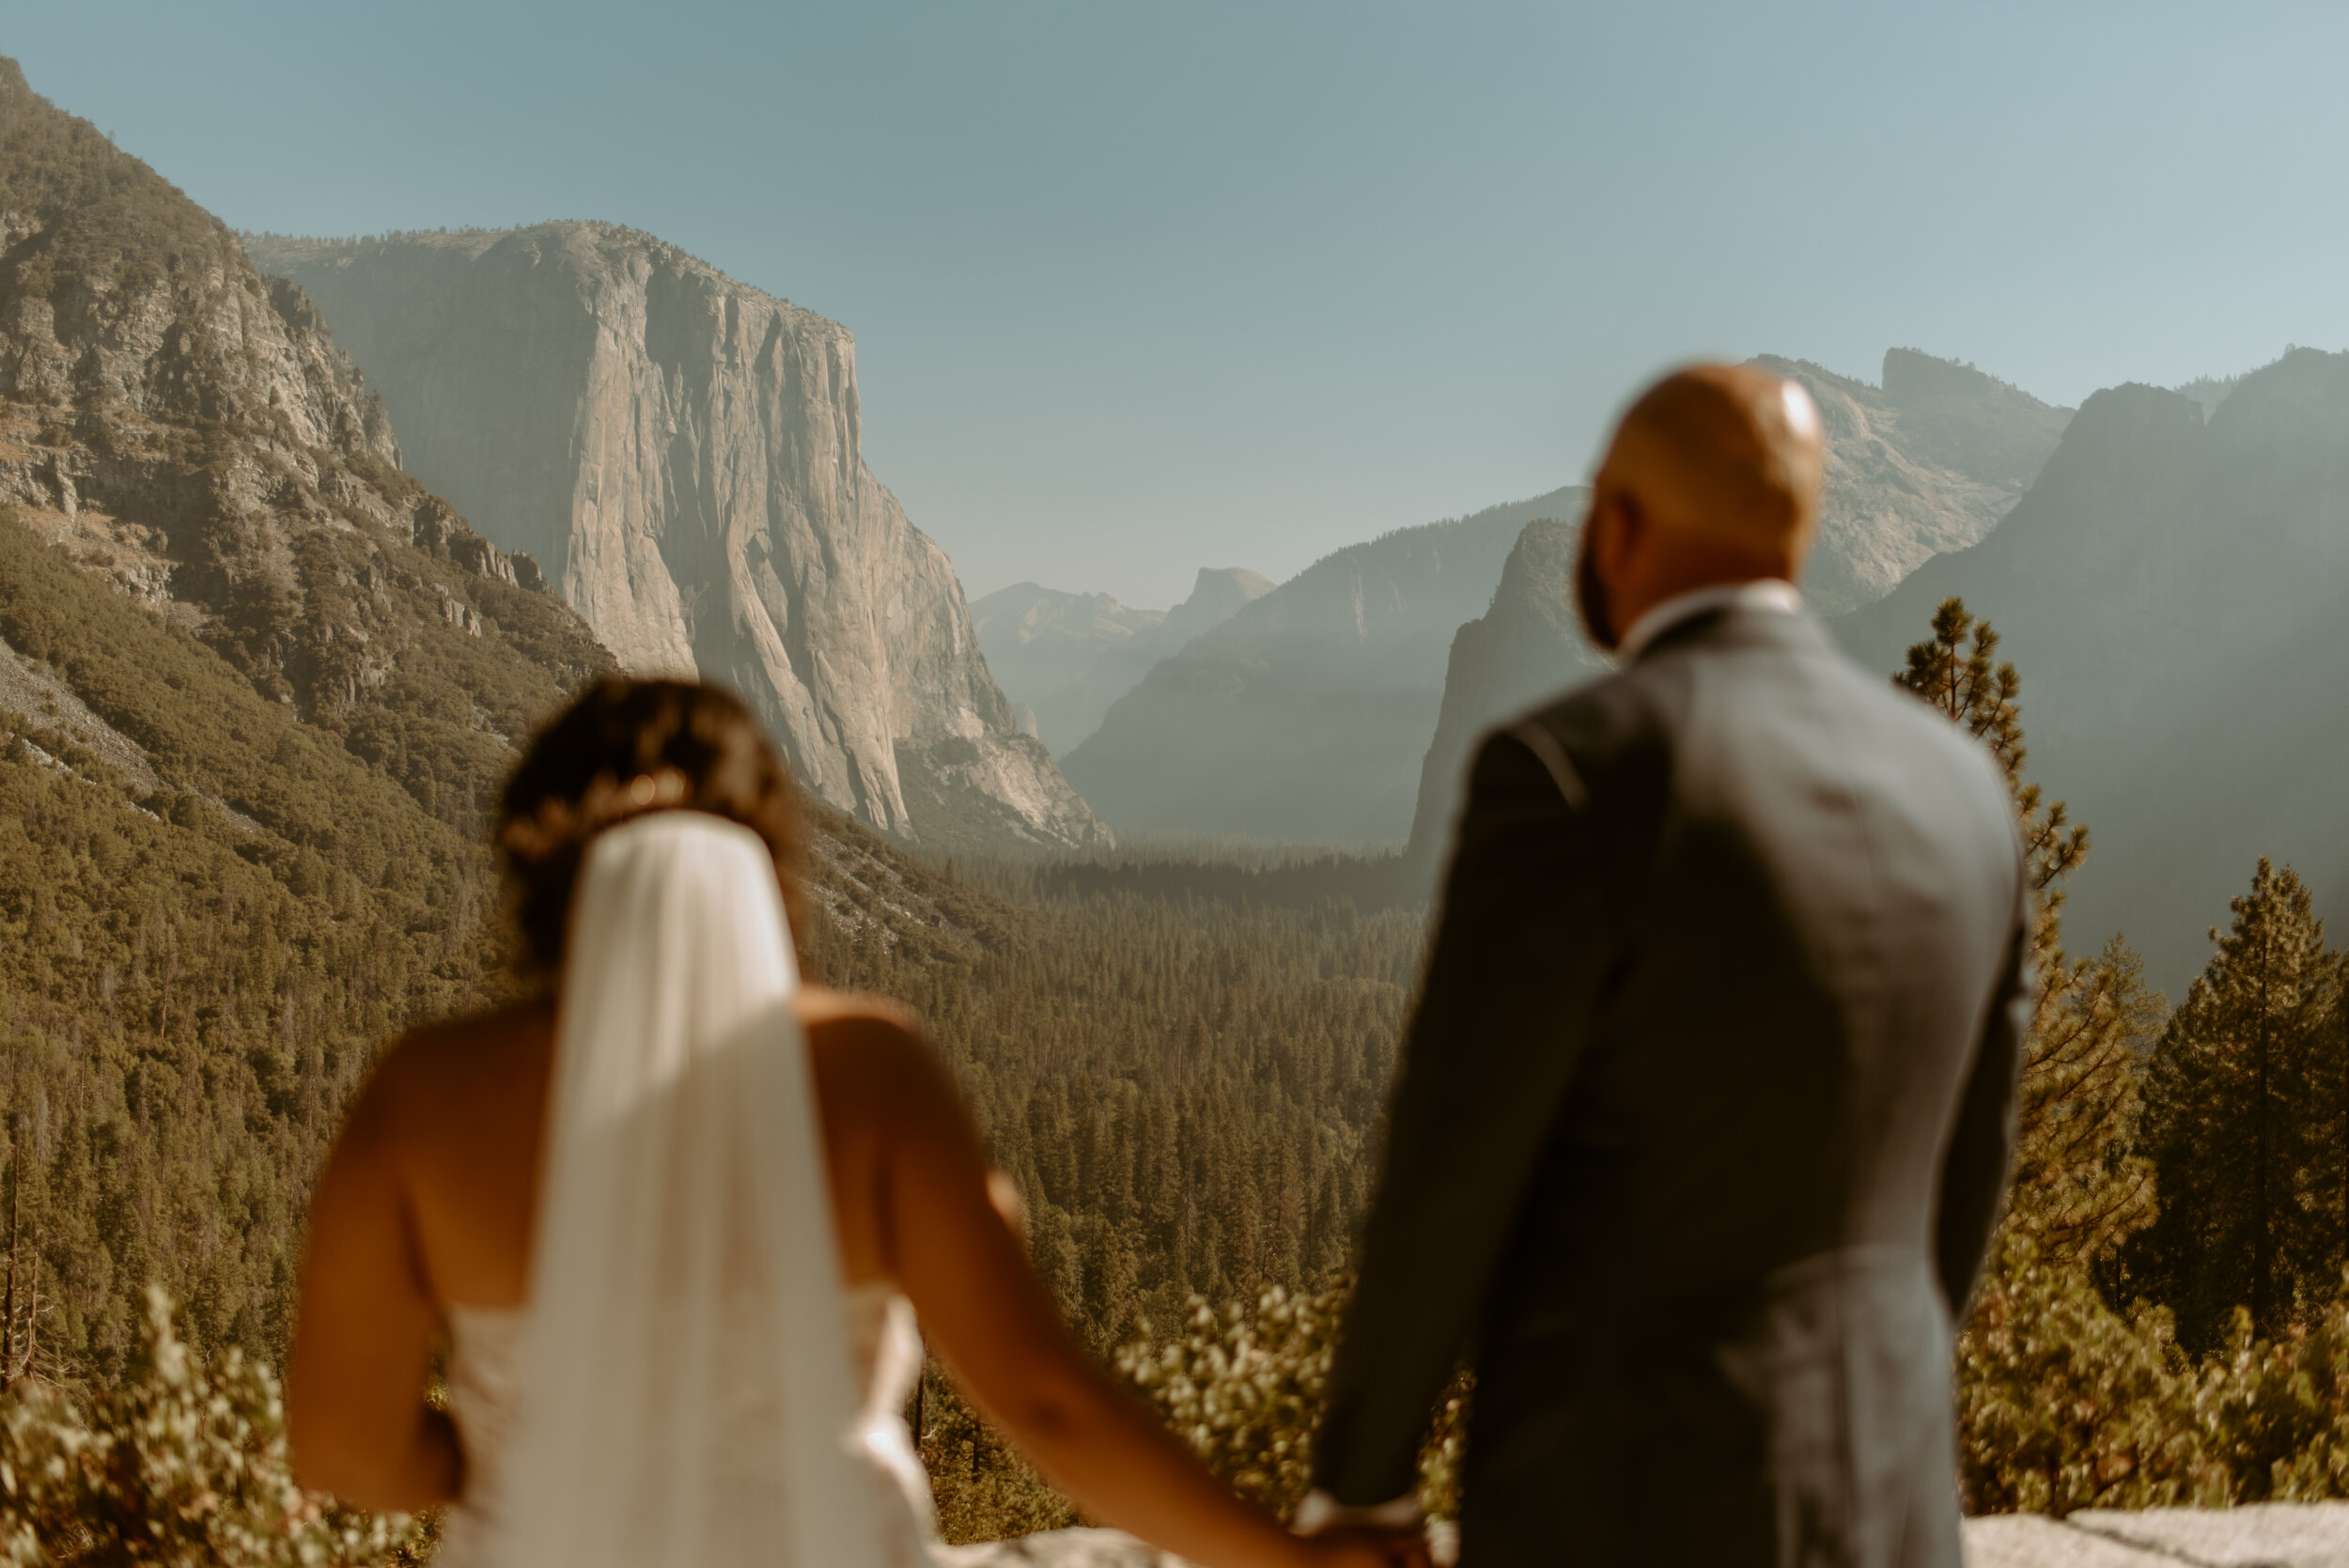 Glacier Point Elopement | Yosemite National Park Elopement and Wedding Photographer | Sunrise adventure elopement | California Elopement Photographer | Tunnel View